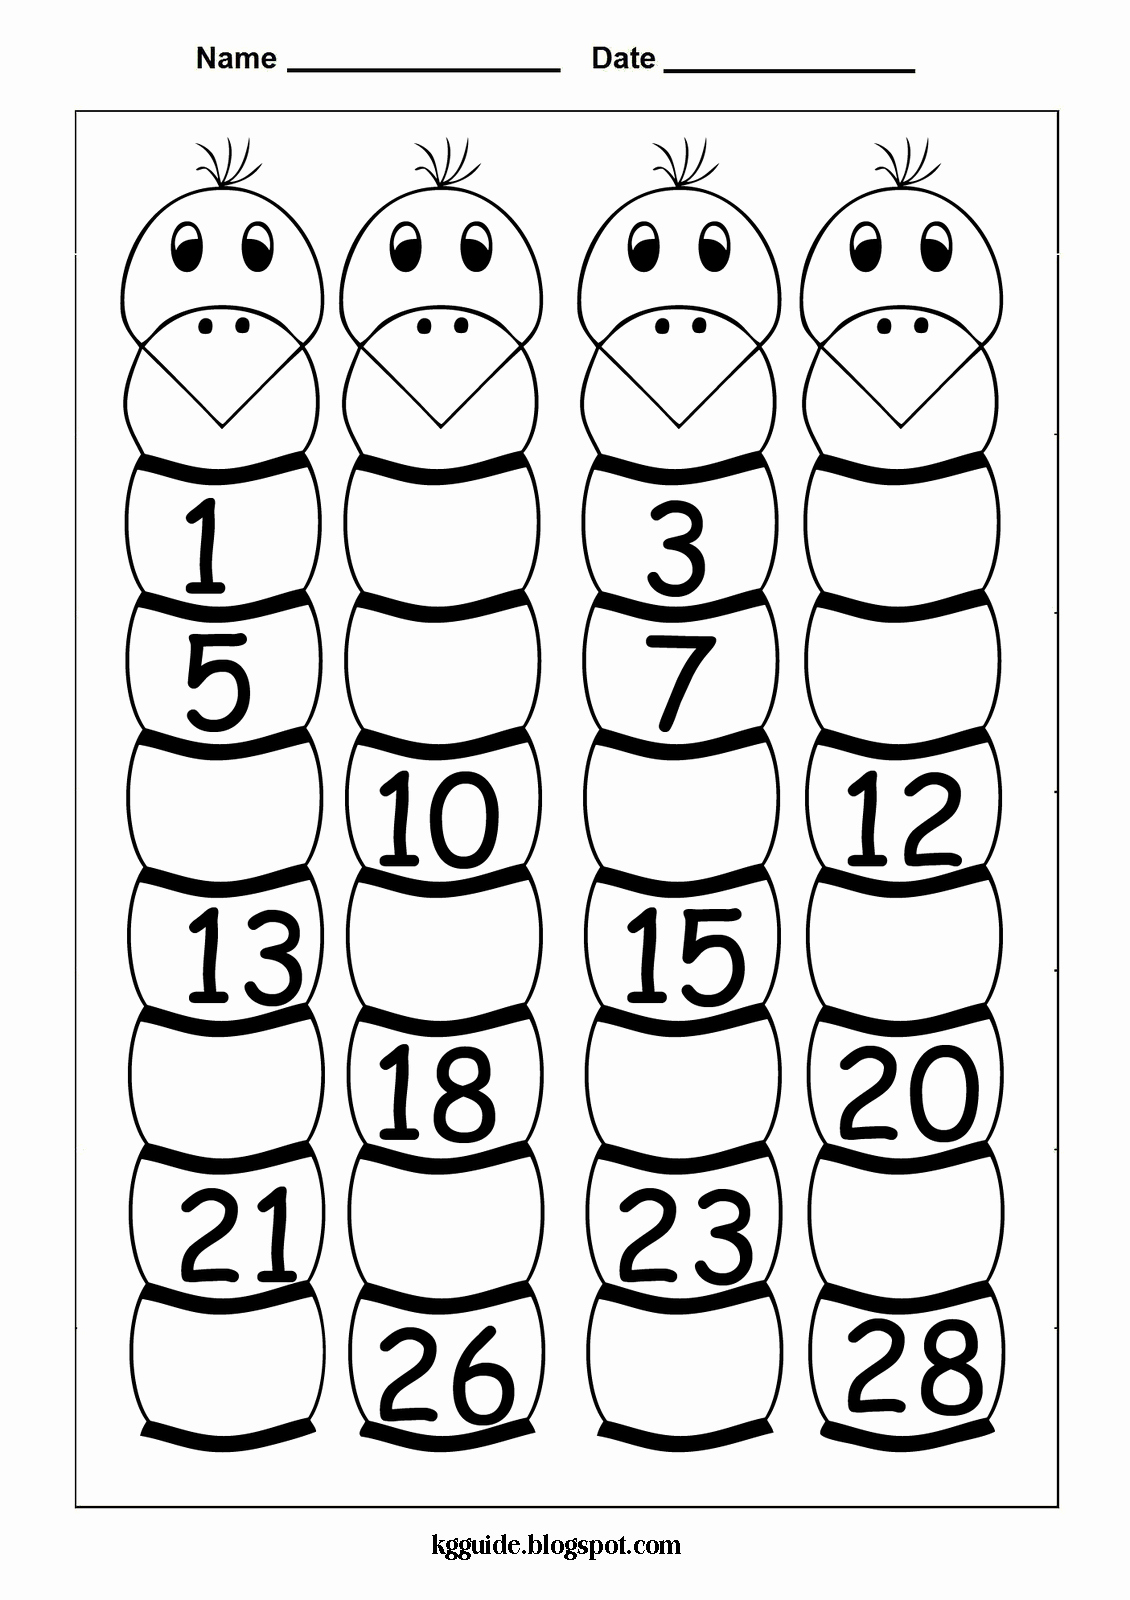 Missing Number Worksheets Kindergarten Beautiful 11 Best Of Printable Count by 2 Worksheets